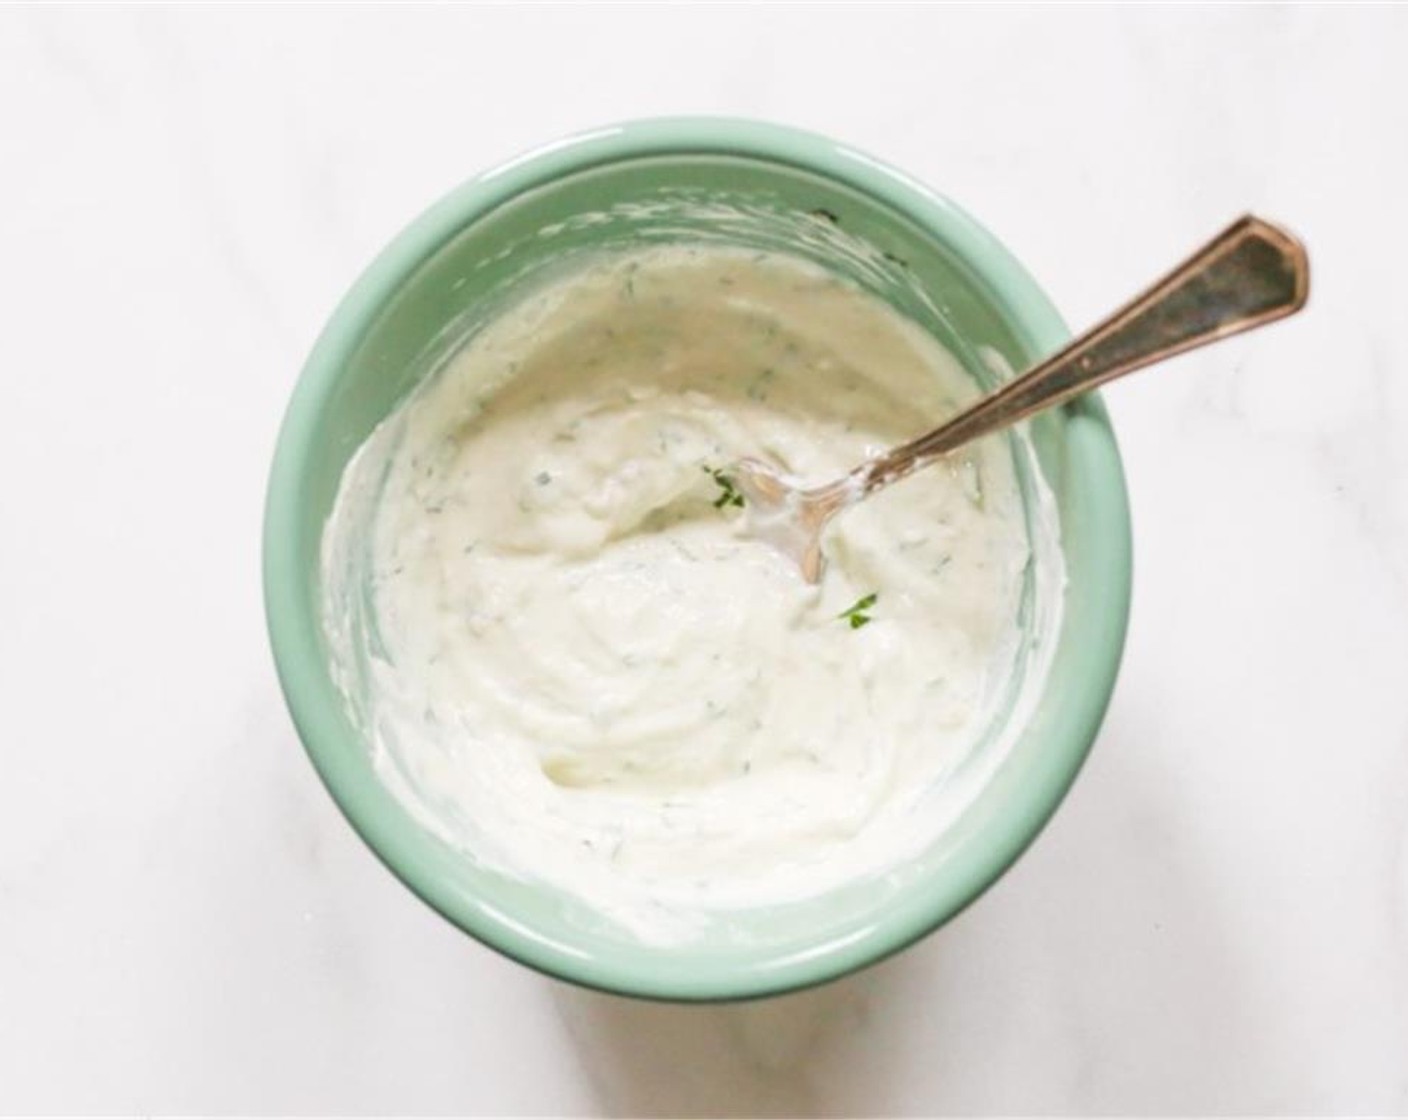 step 6 Meanwhile whip up the harissa yogurt sauce. Combine the Nonfat Plain Greek Yogurt (3/4 cup), Lemon (1/2), Italian Flat-Leaf Parsley (1 Tbsp), Kosher Salt (to taste), Green Harissa (1 Tbsp), and Green Harissa (1 teaspoon) in a small bowl.